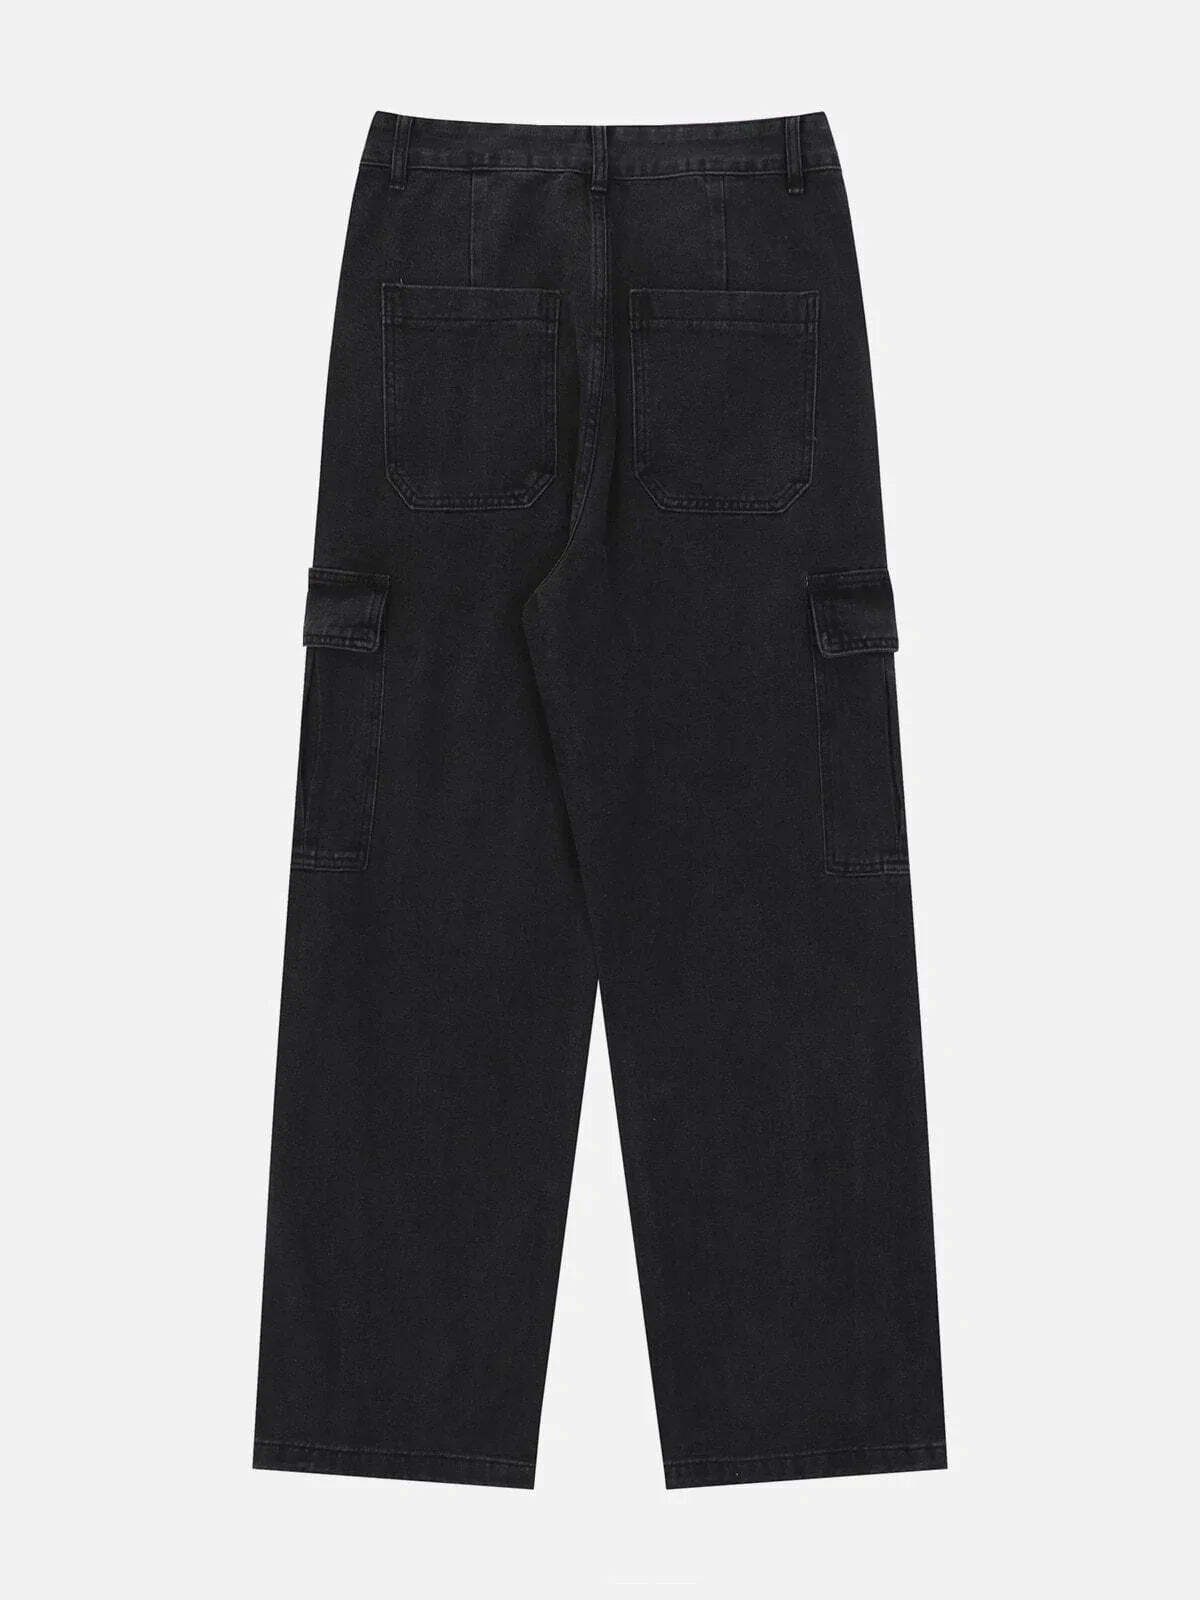 vintage patched pocket jeans edgy y2k streetwear 5719